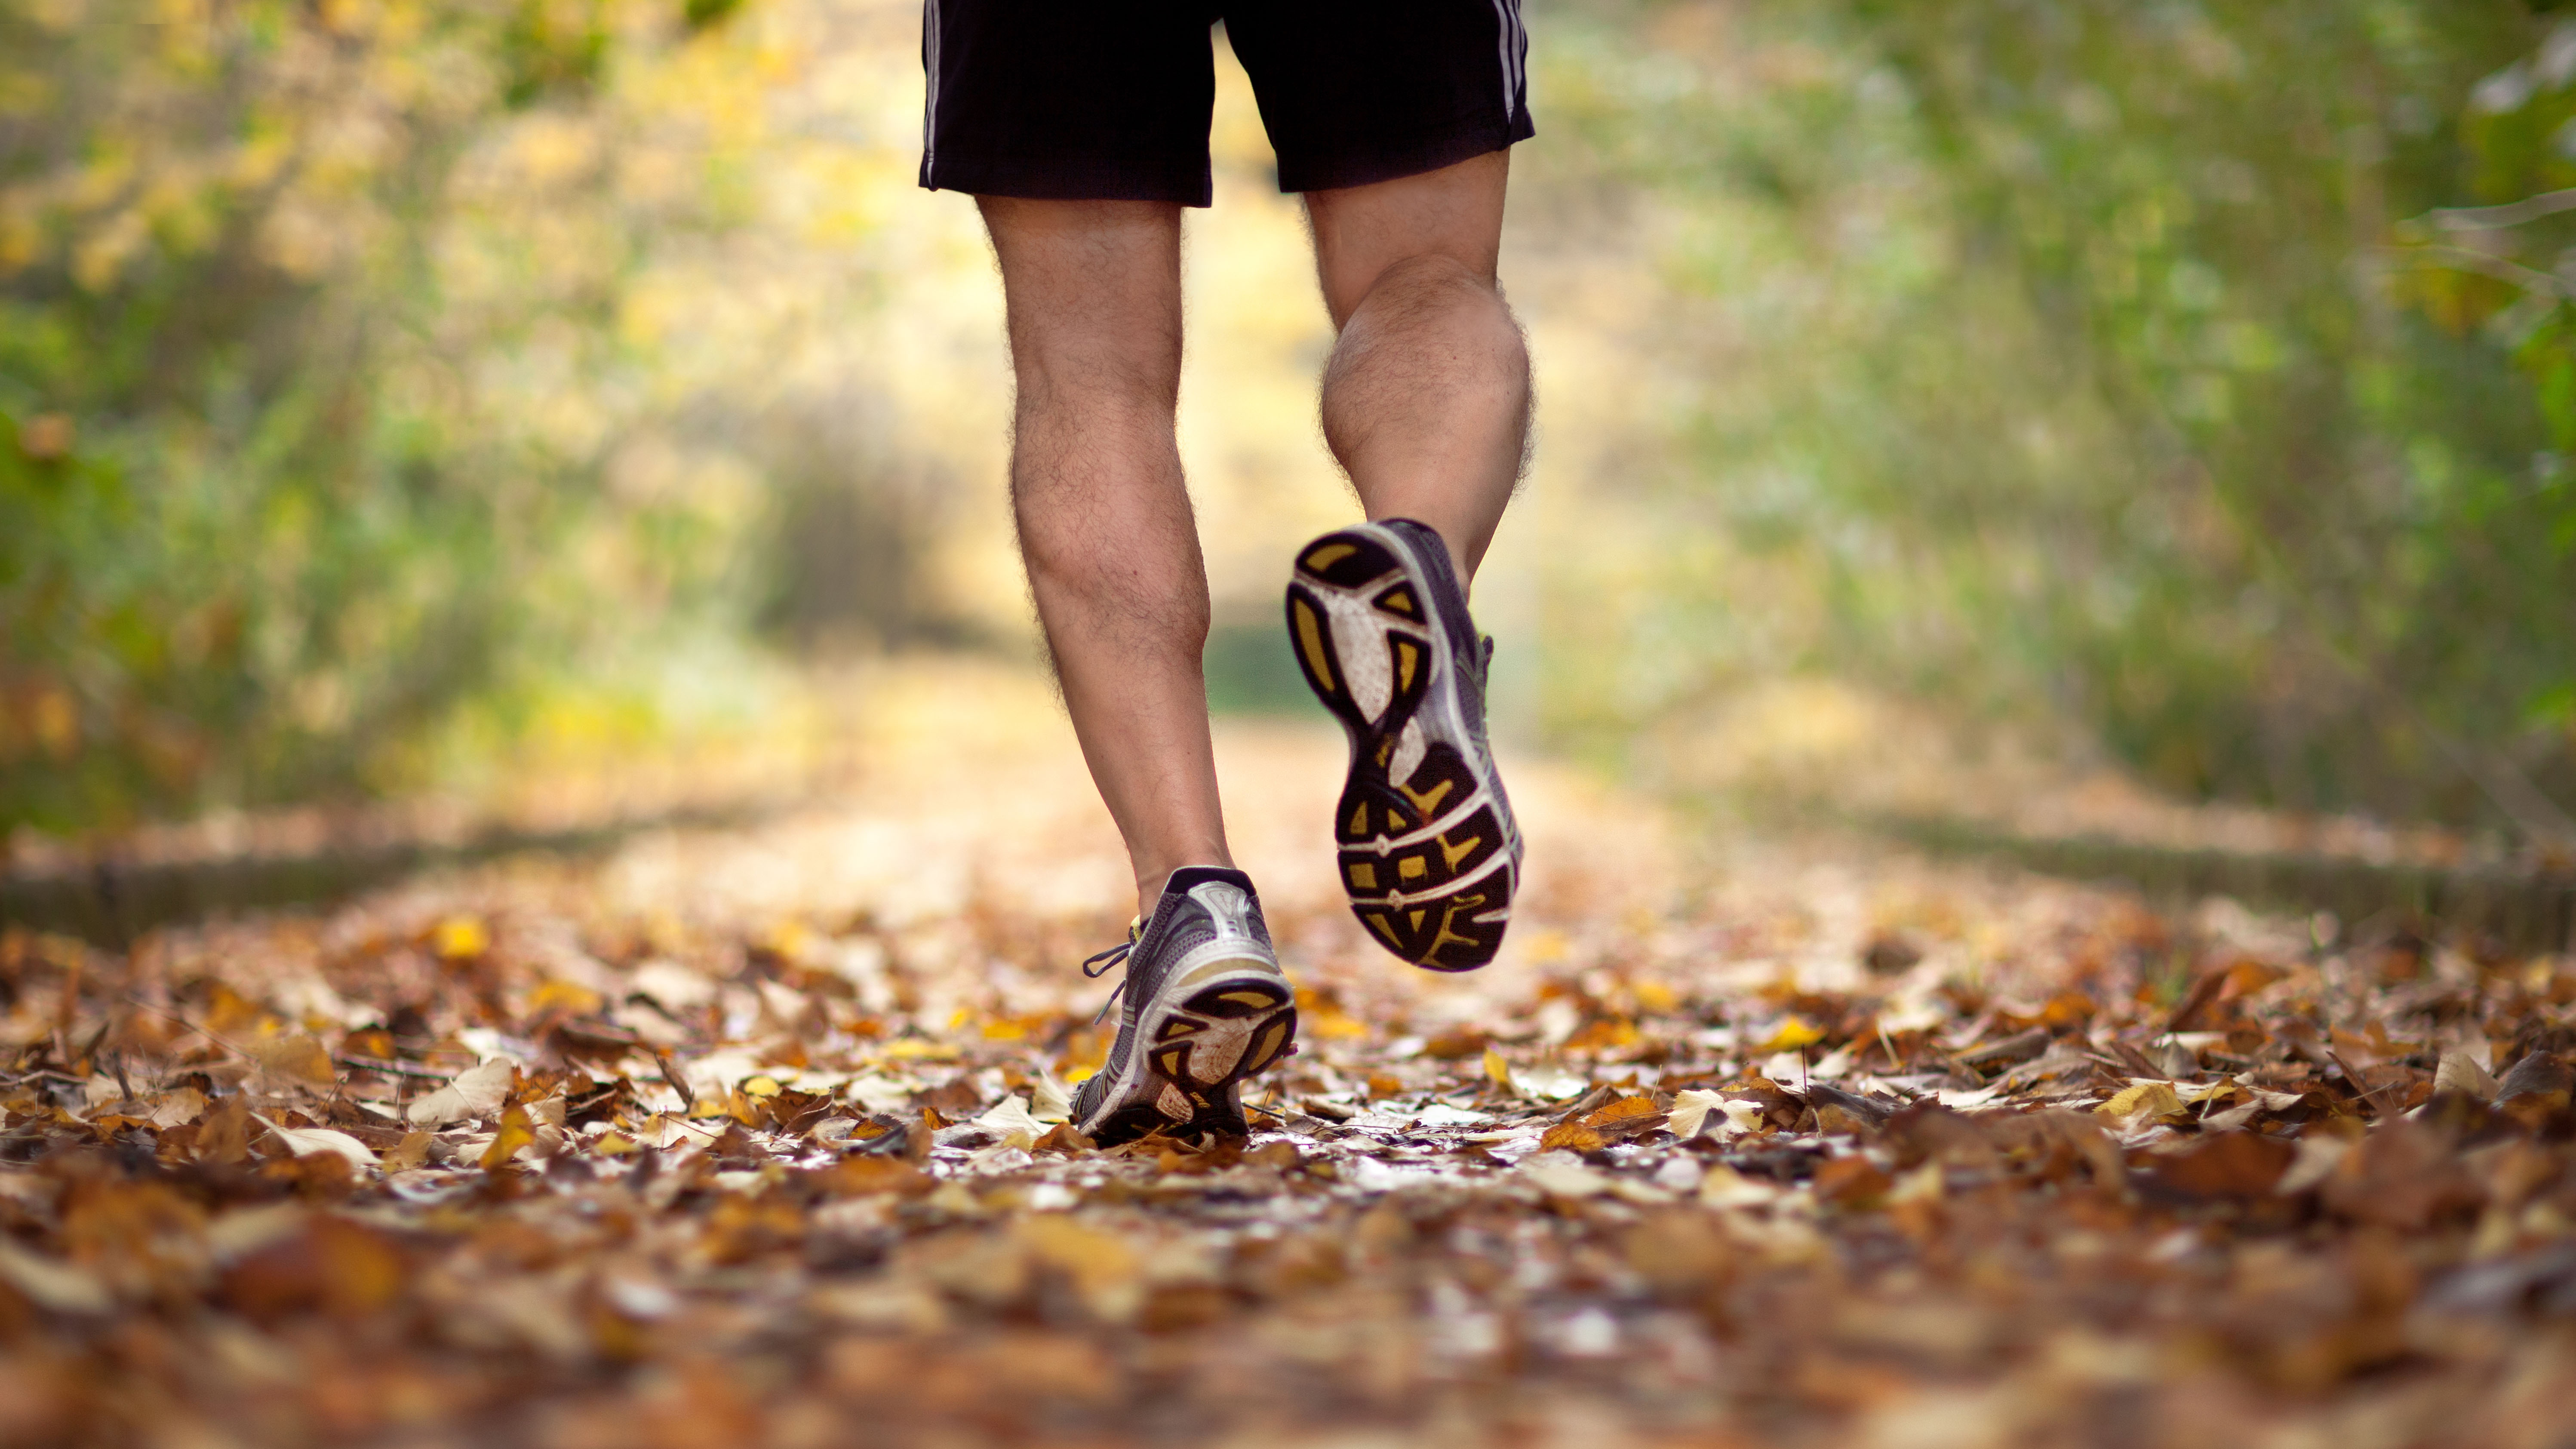 Man running on fallen leaves in fall